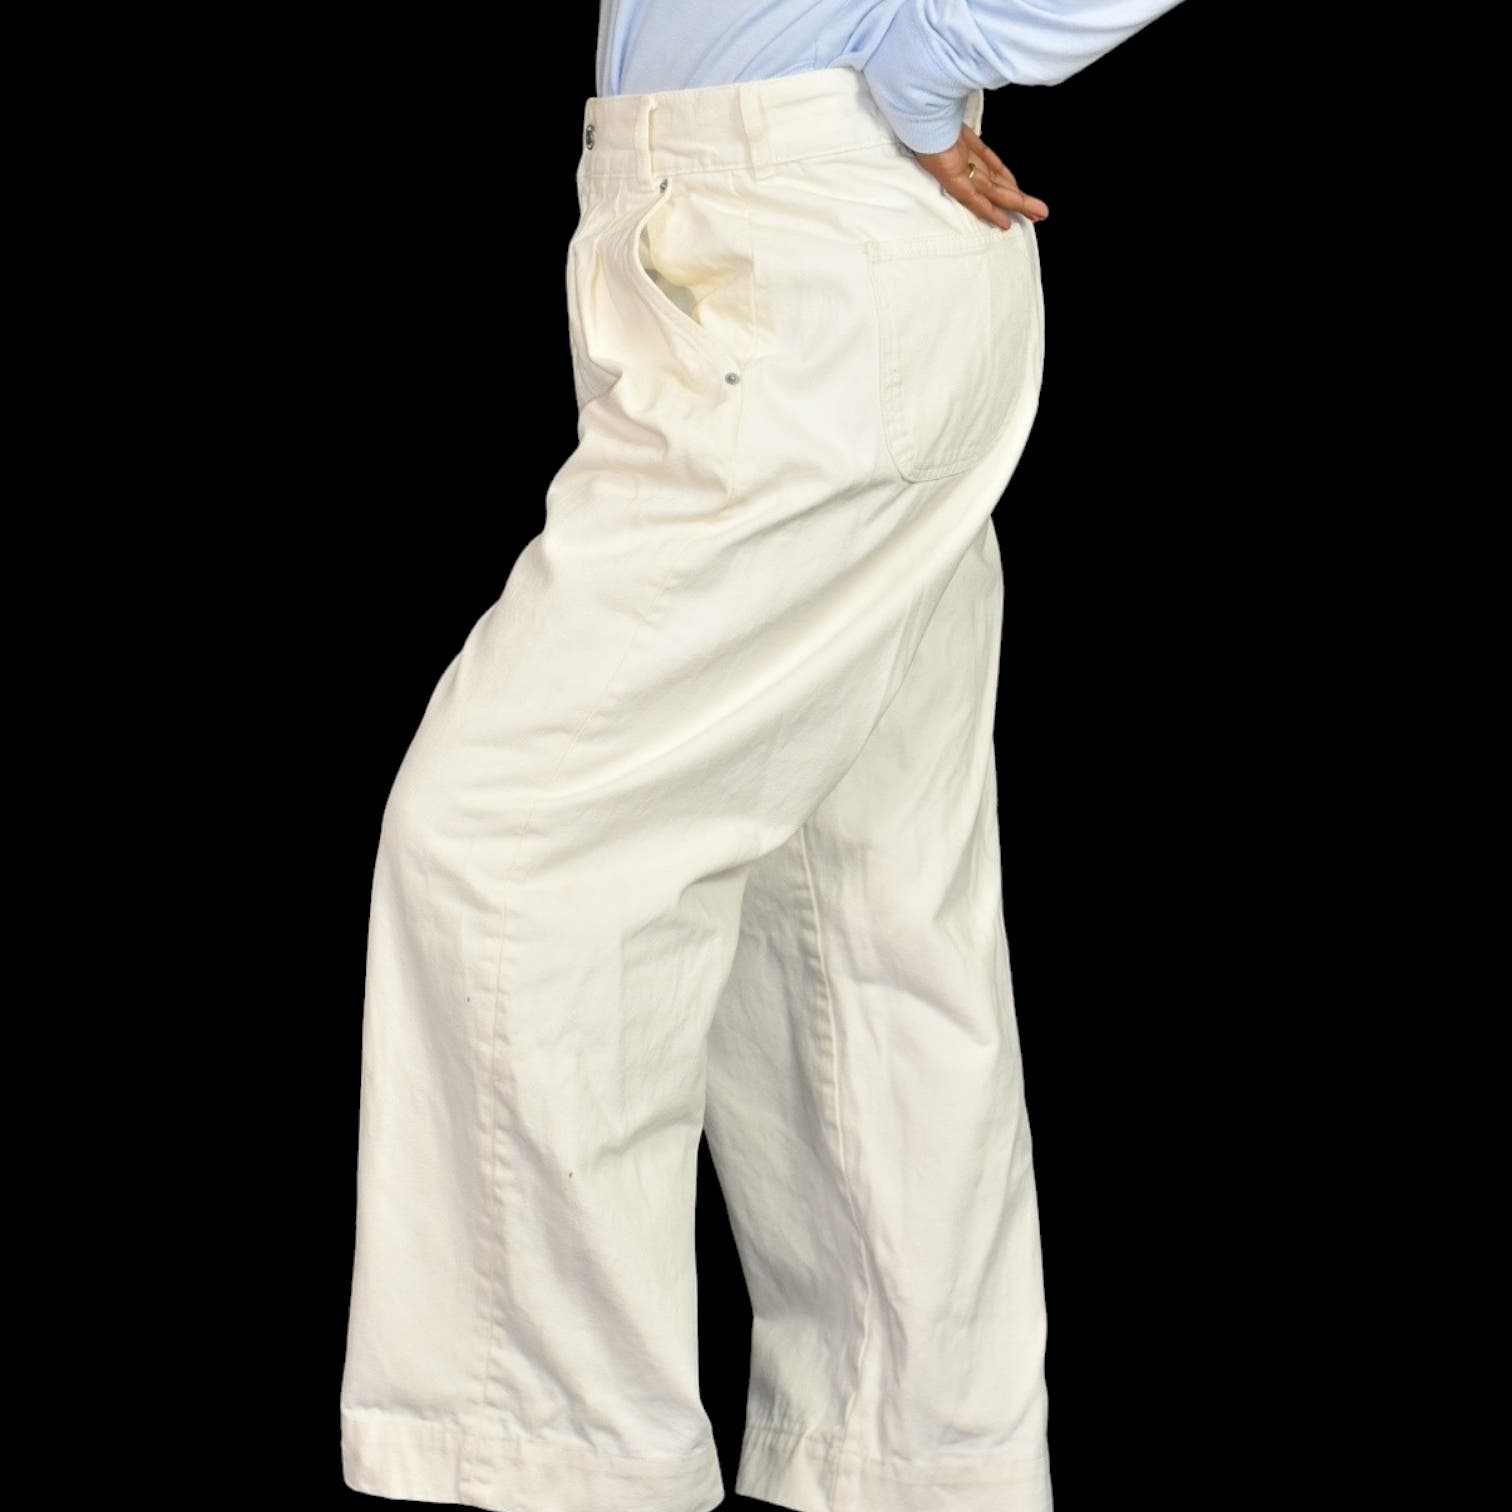 Zara Baggy Jeans White Cream Wide Leg High Waist Trouser Slouchy Chino Khaki Straight Rigid Cotton Denim Size 8